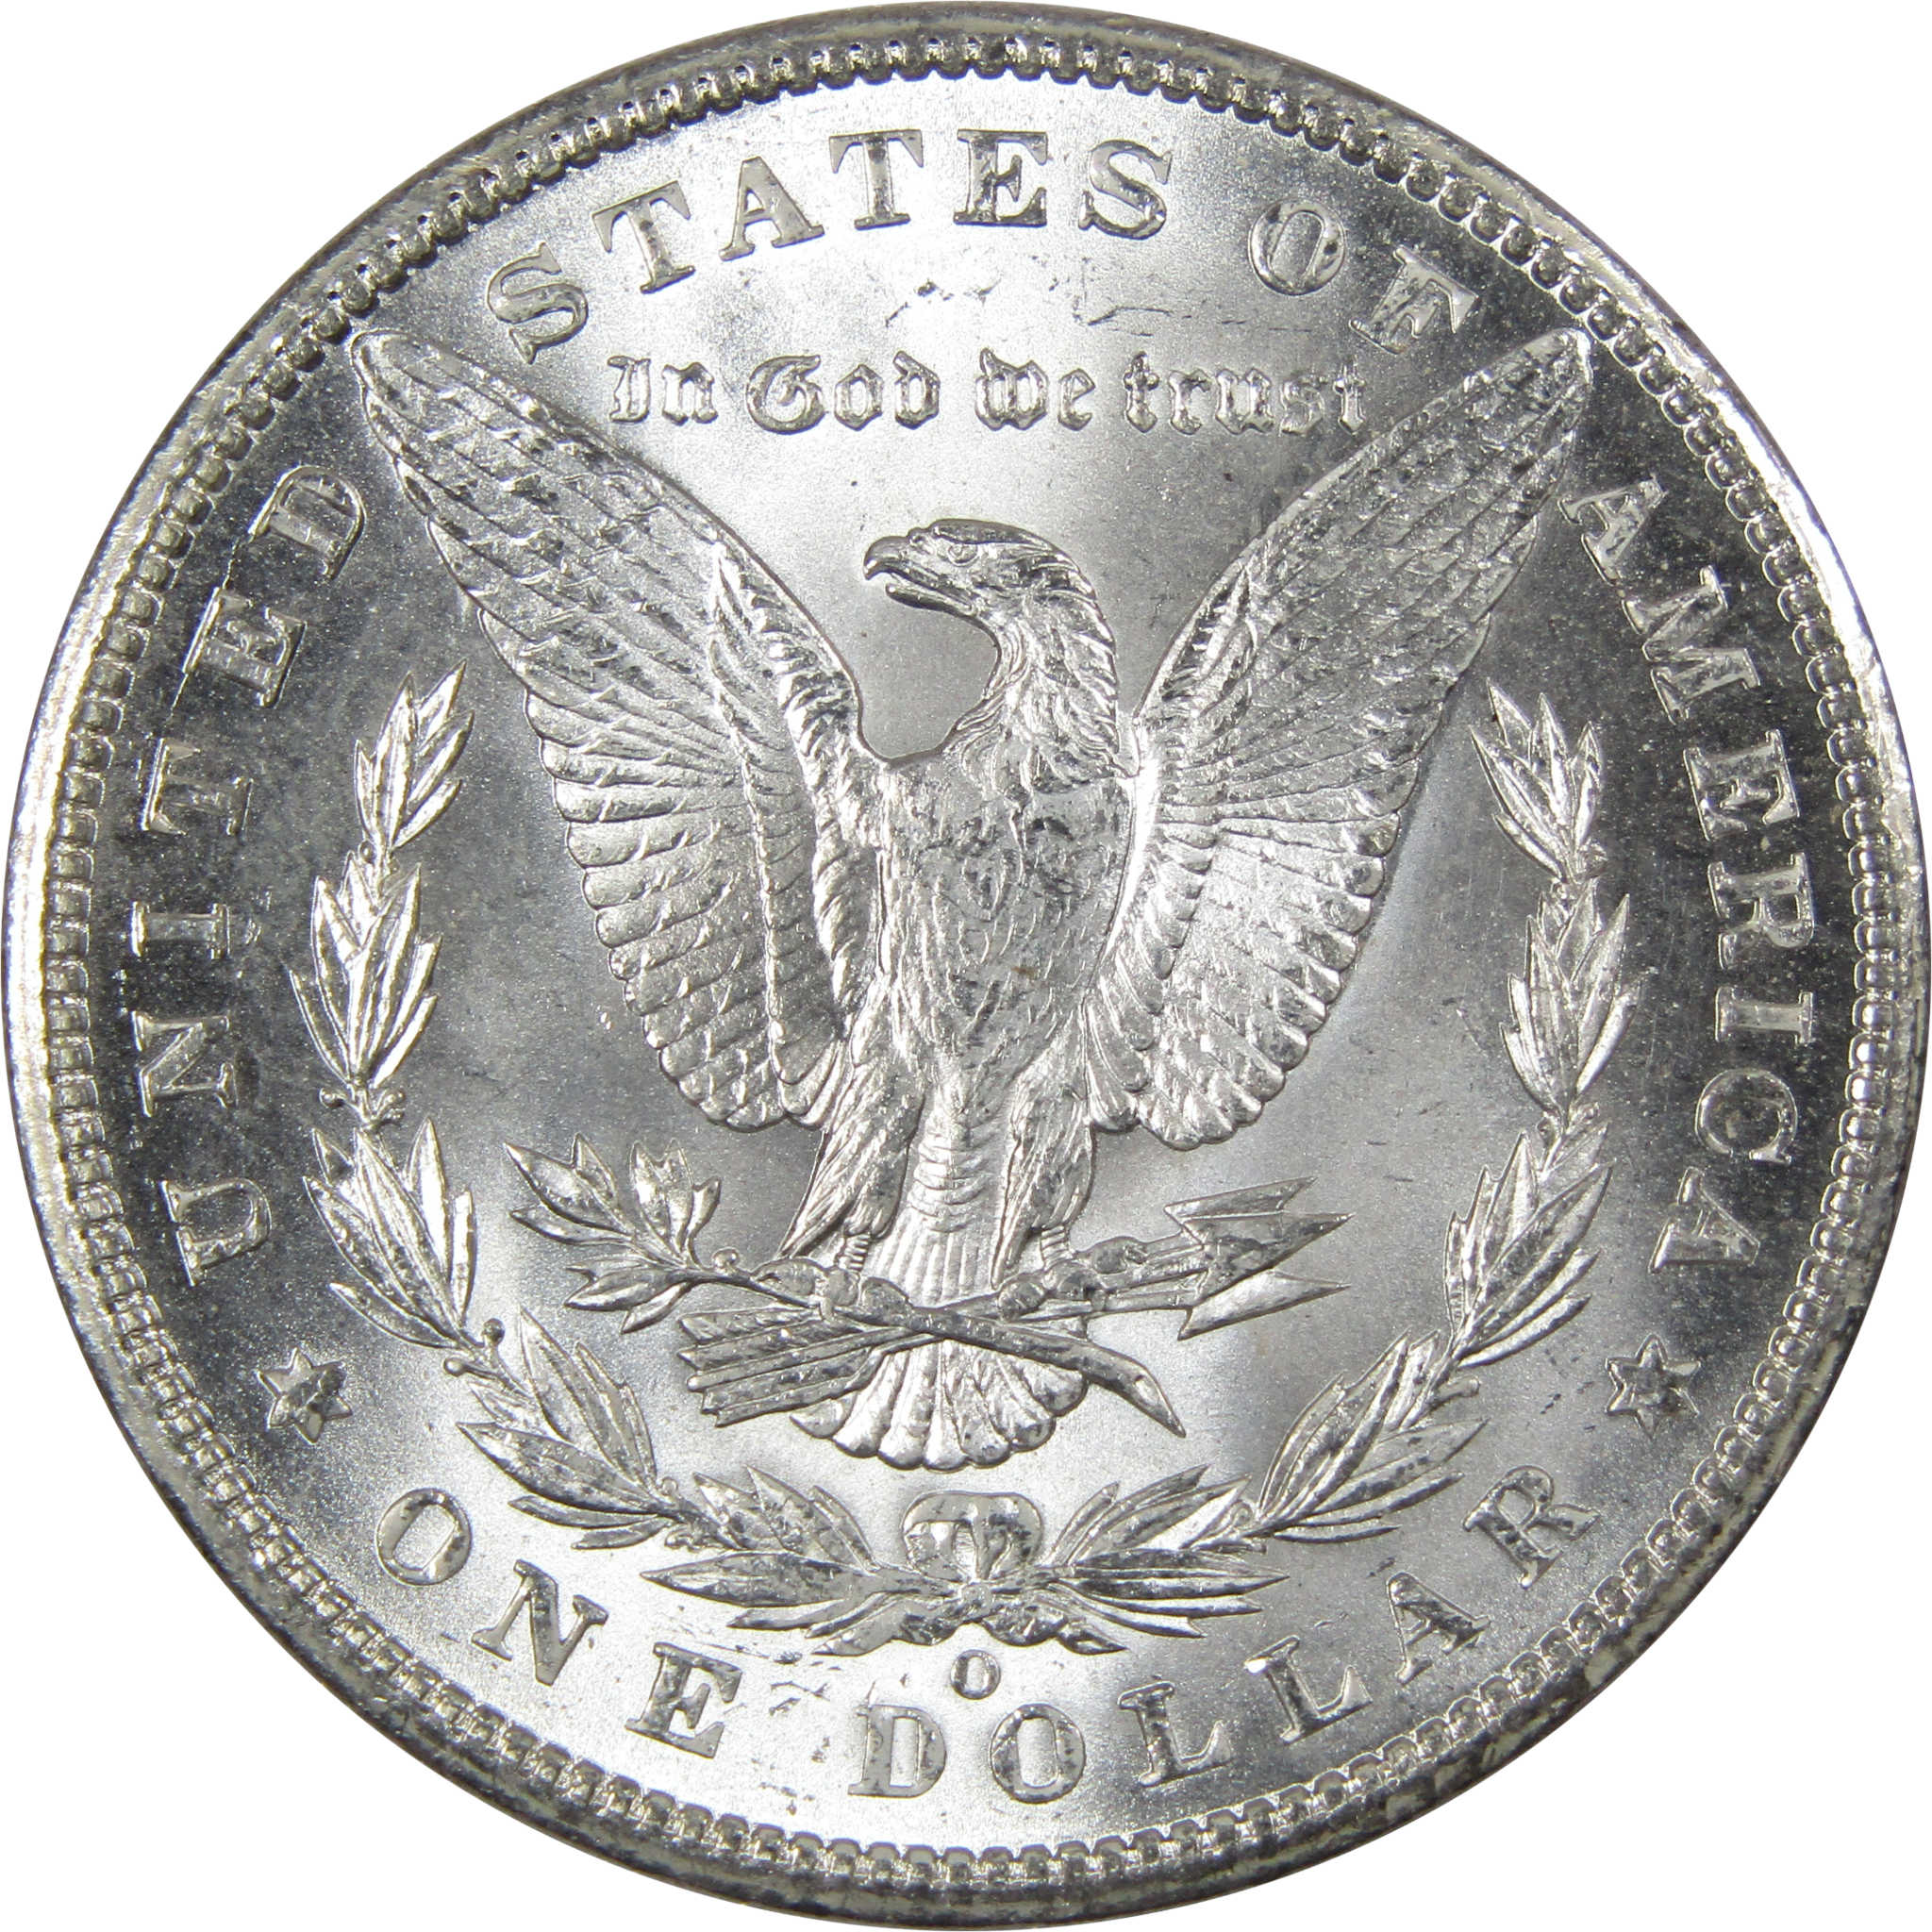 1900 O Morgan Dollar BU Uncirculated Mint State 90% Silver SKU:IPC9752 - Morgan coin - Morgan silver dollar - Morgan silver dollar for sale - Profile Coins &amp; Collectibles